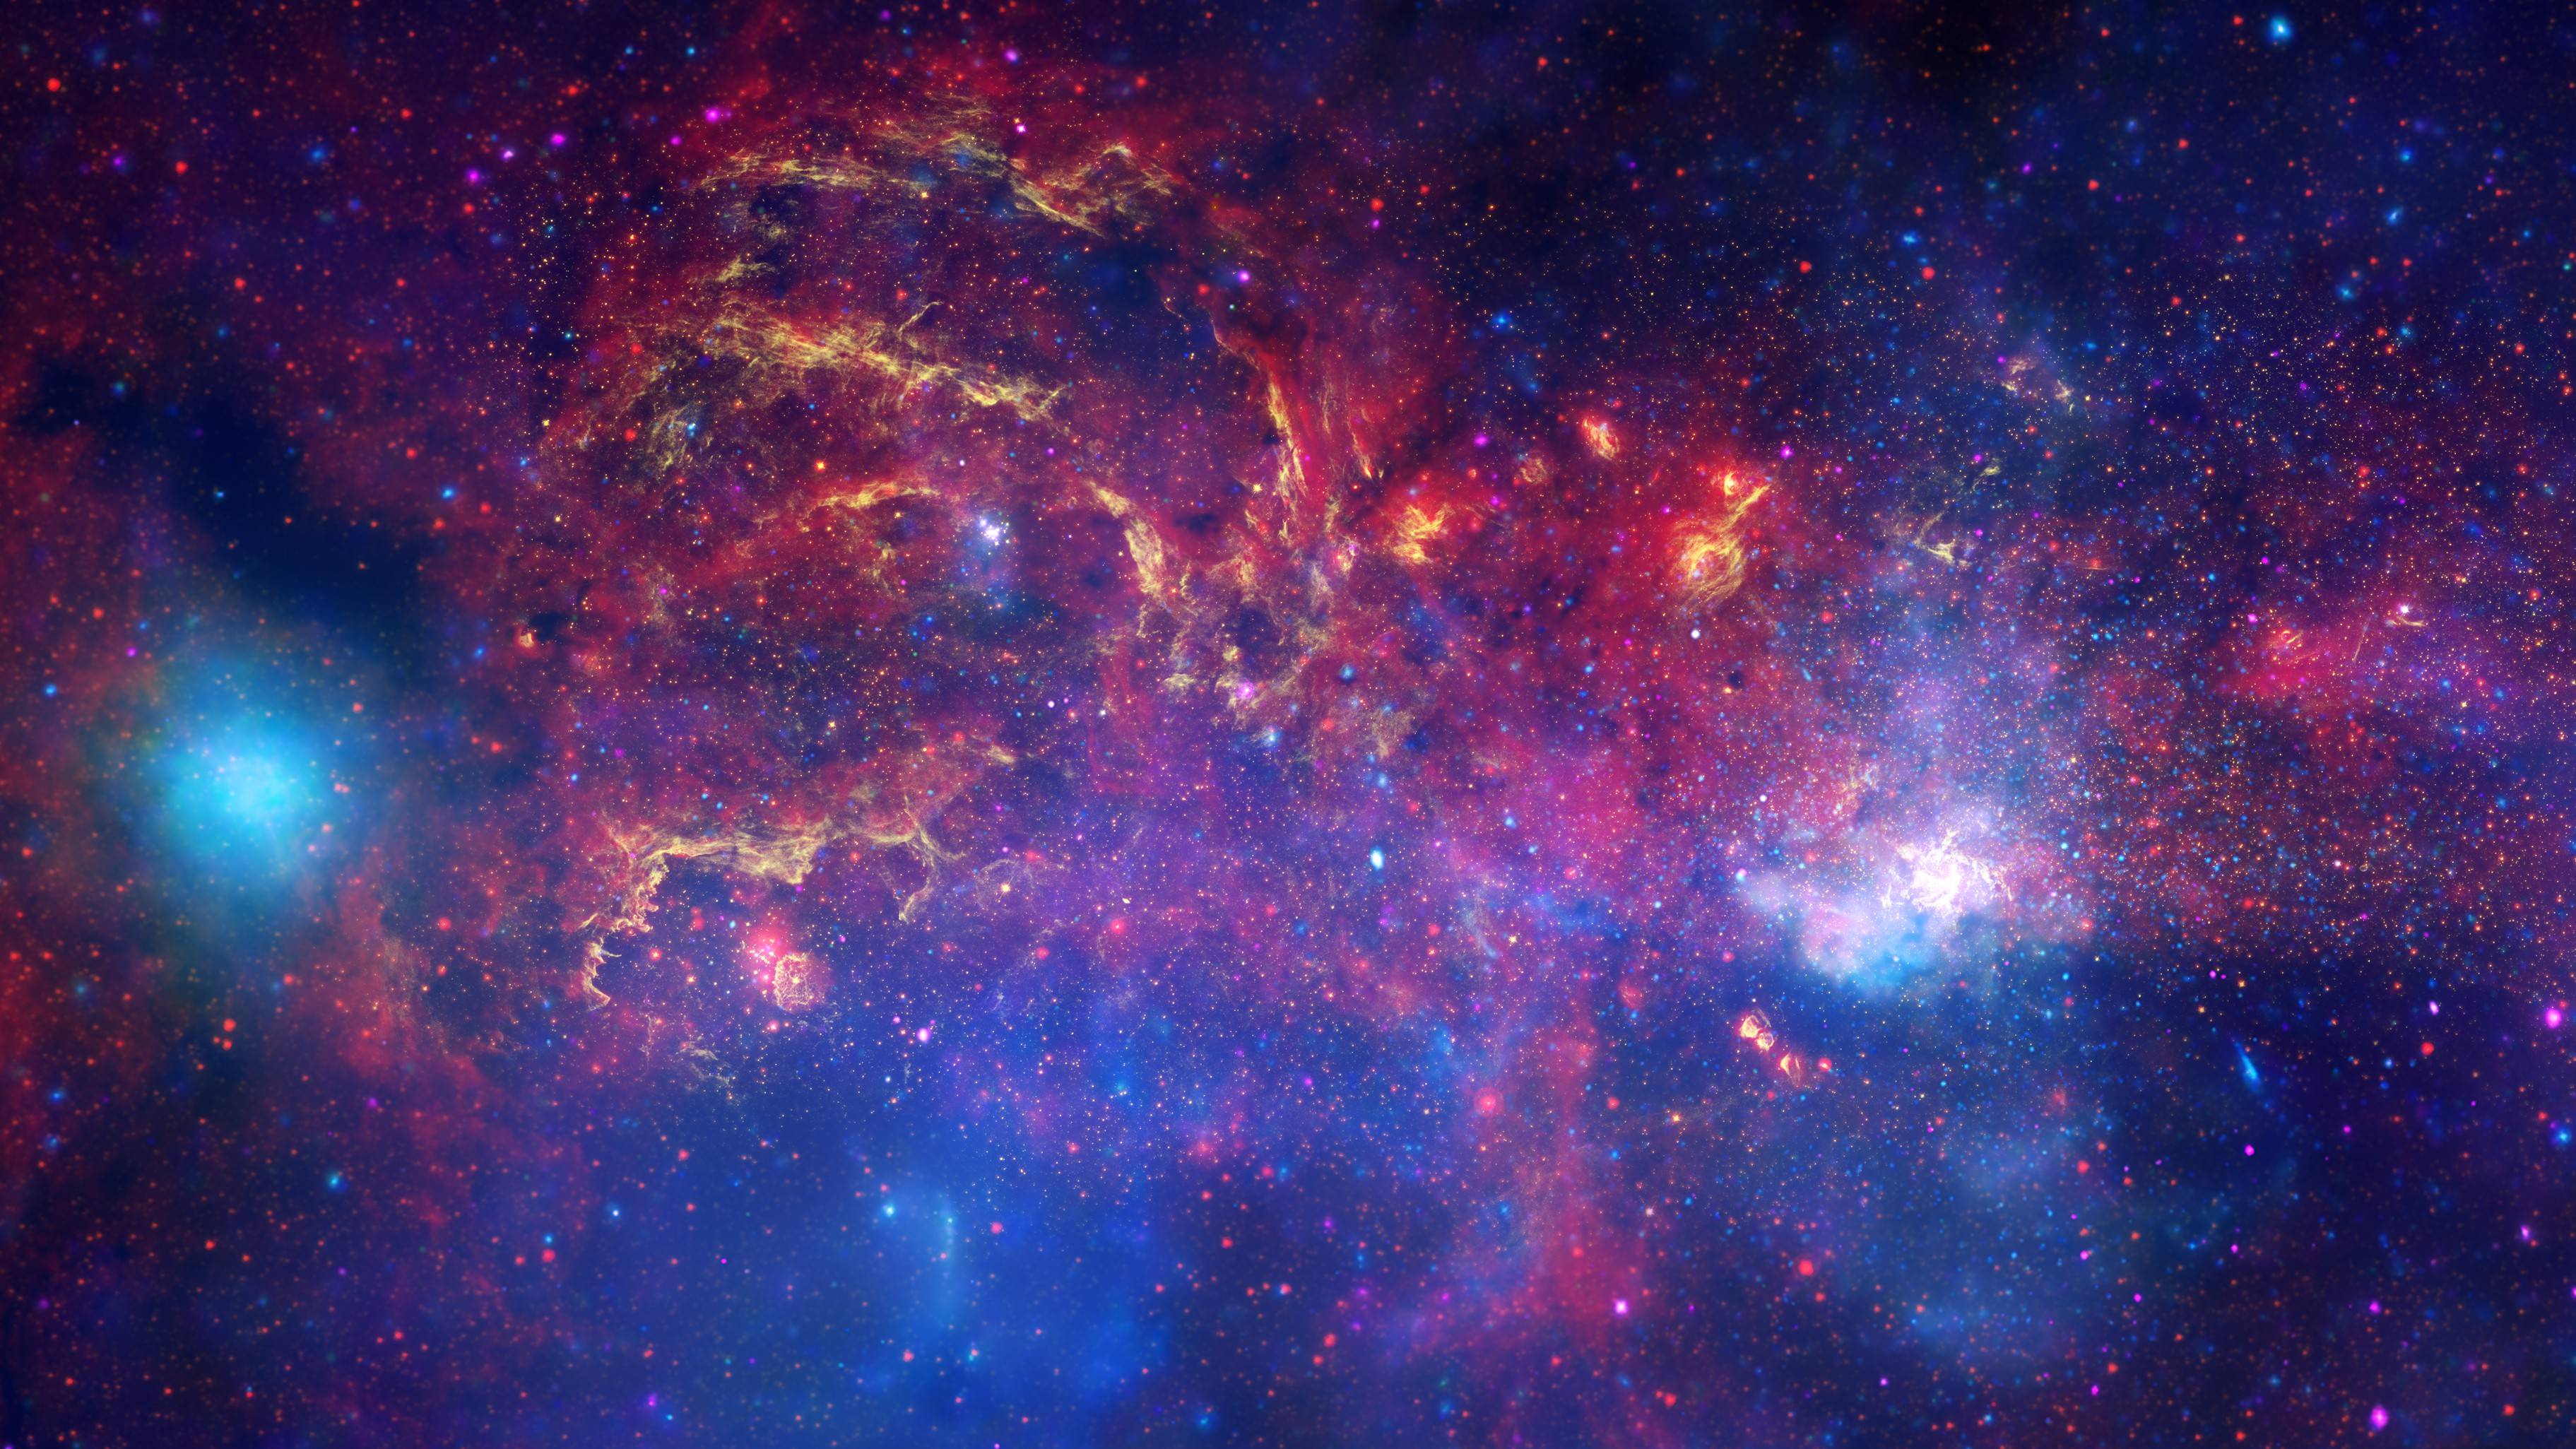 Nebula Computer Wallpaper, Desktop Background 3646x2051 Id: 205884